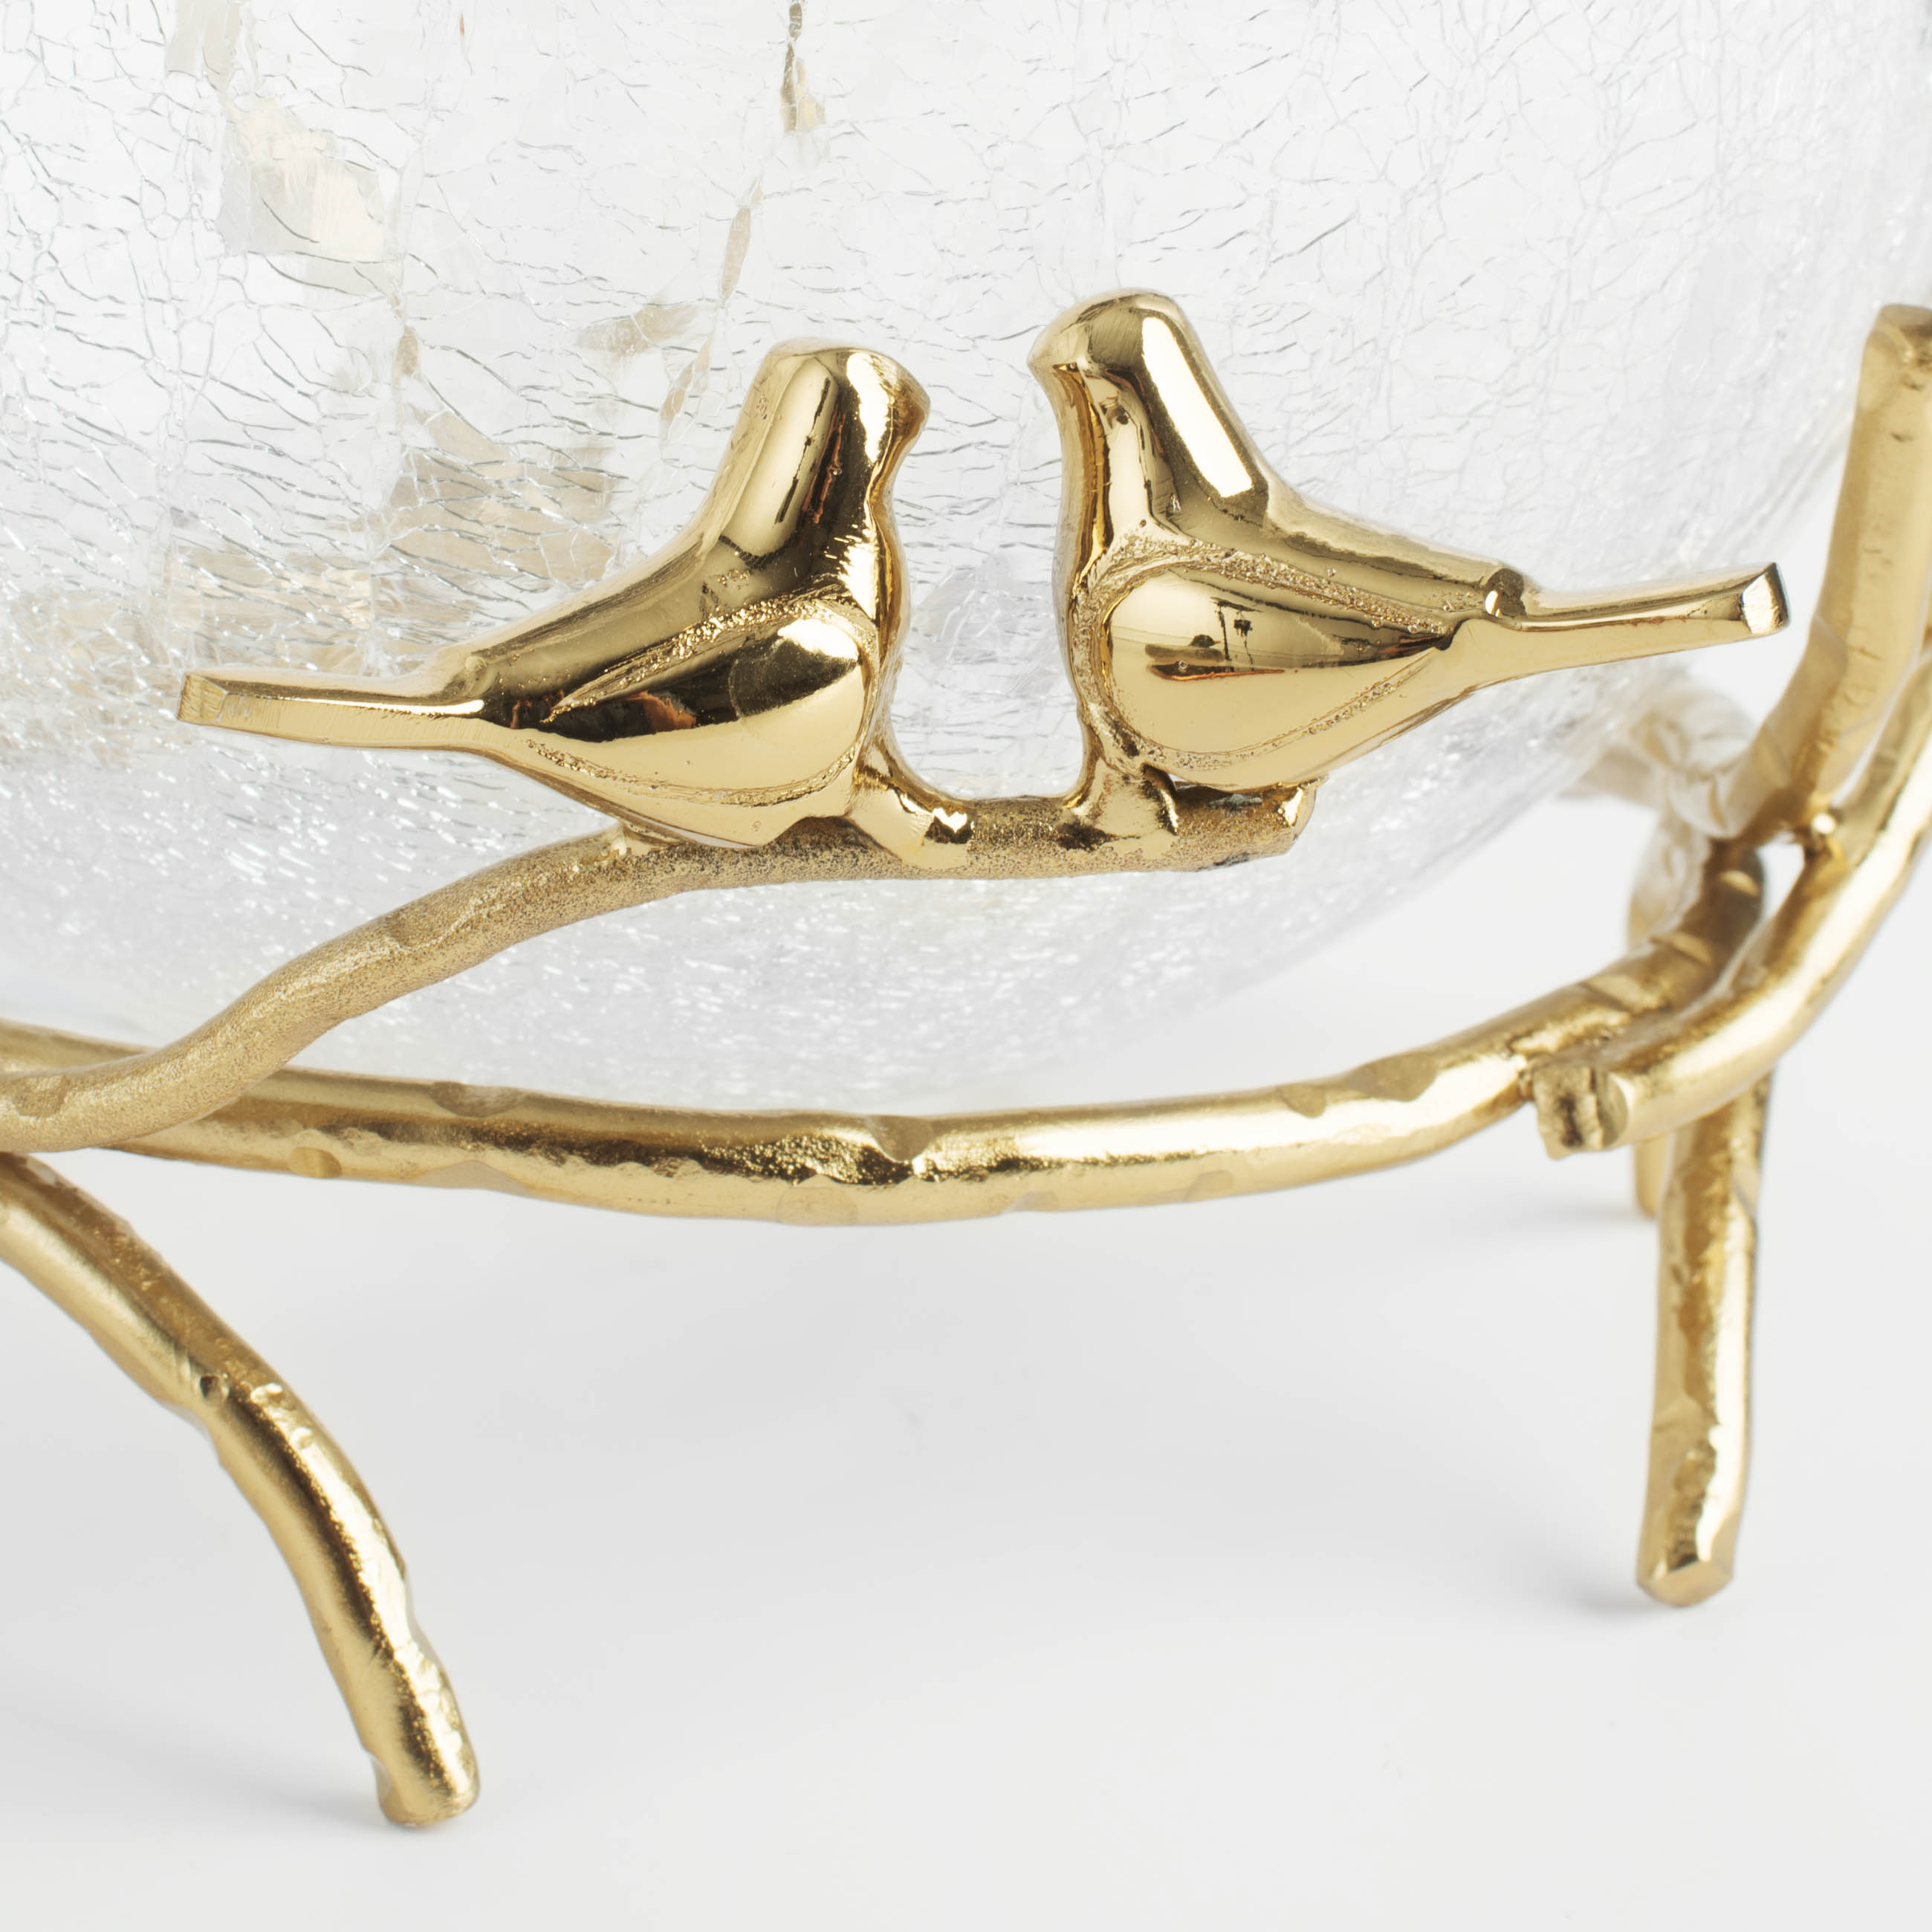 Deep dish, 21x9 cm, on a stand, glass / metal, golden, Birds, Fantastic gold изображение № 2